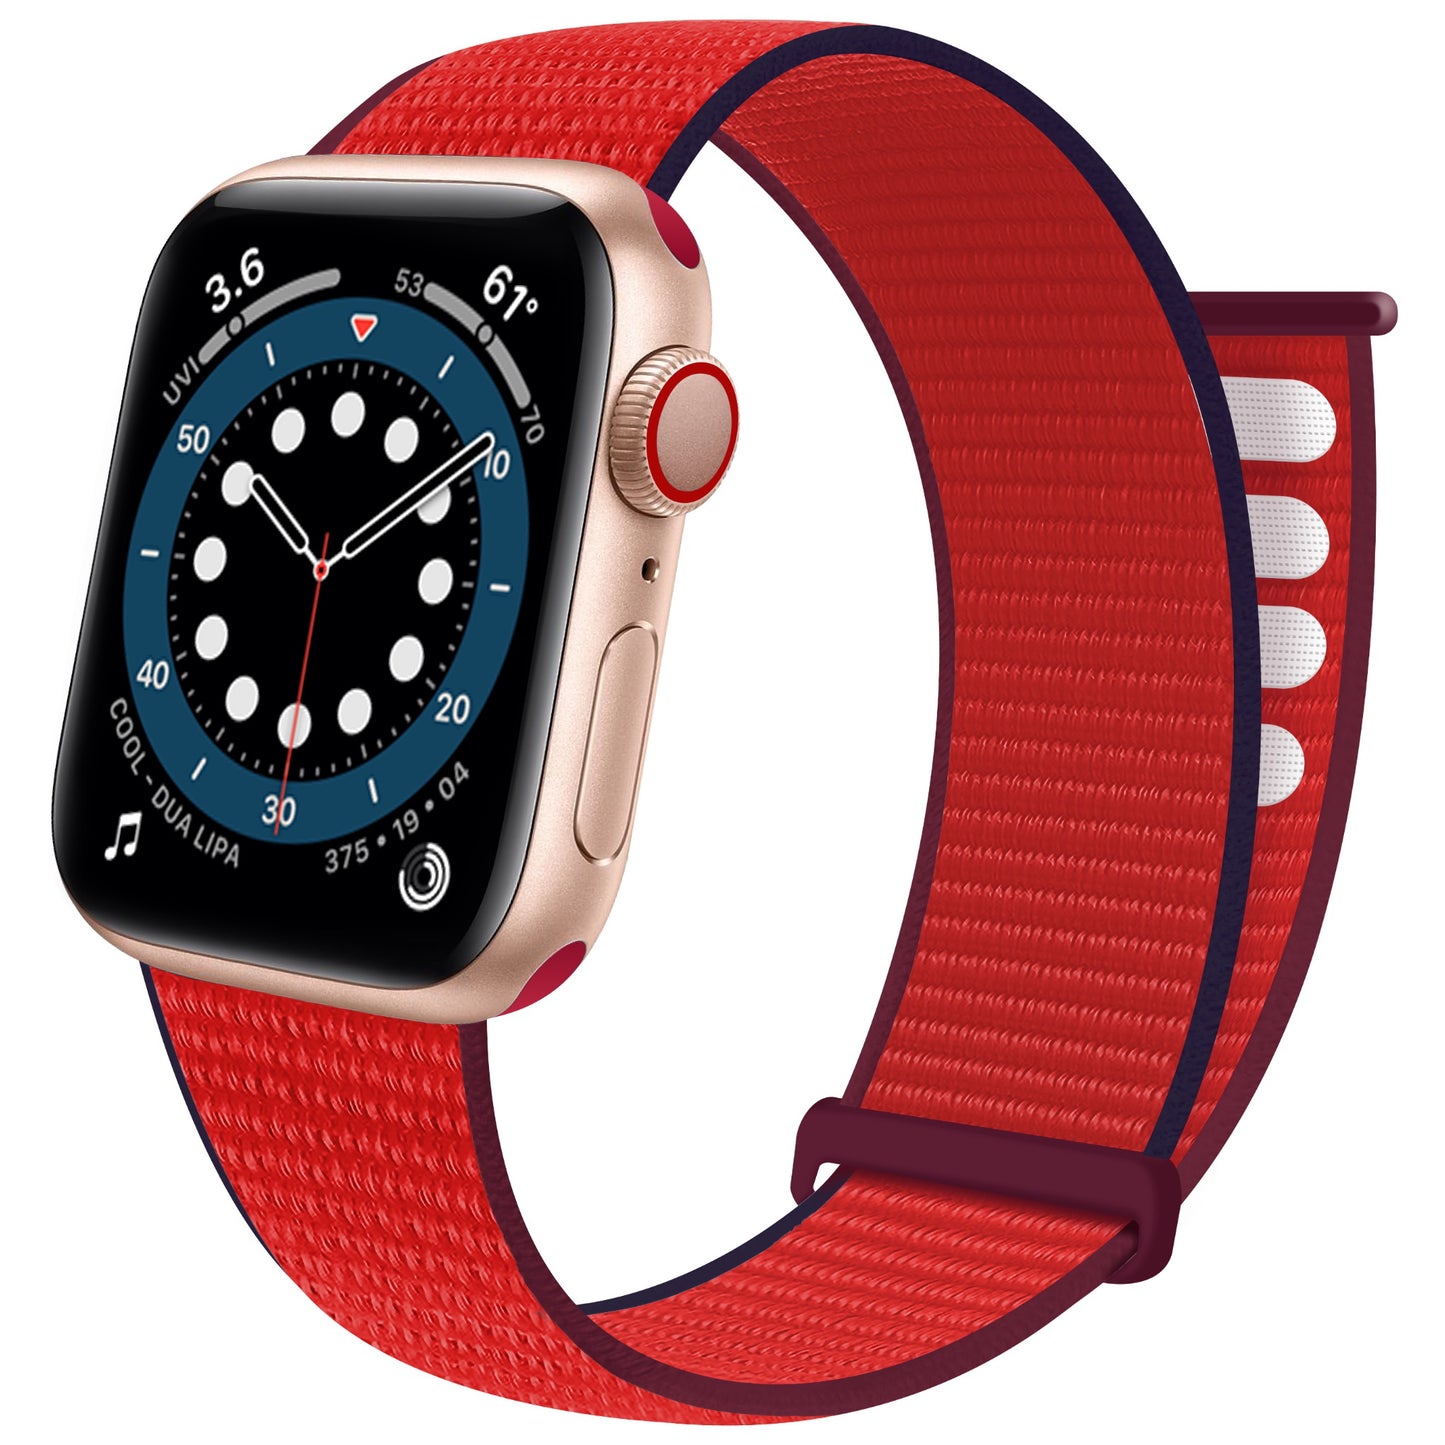 arktisband Apple Watch Sport Loop Armband